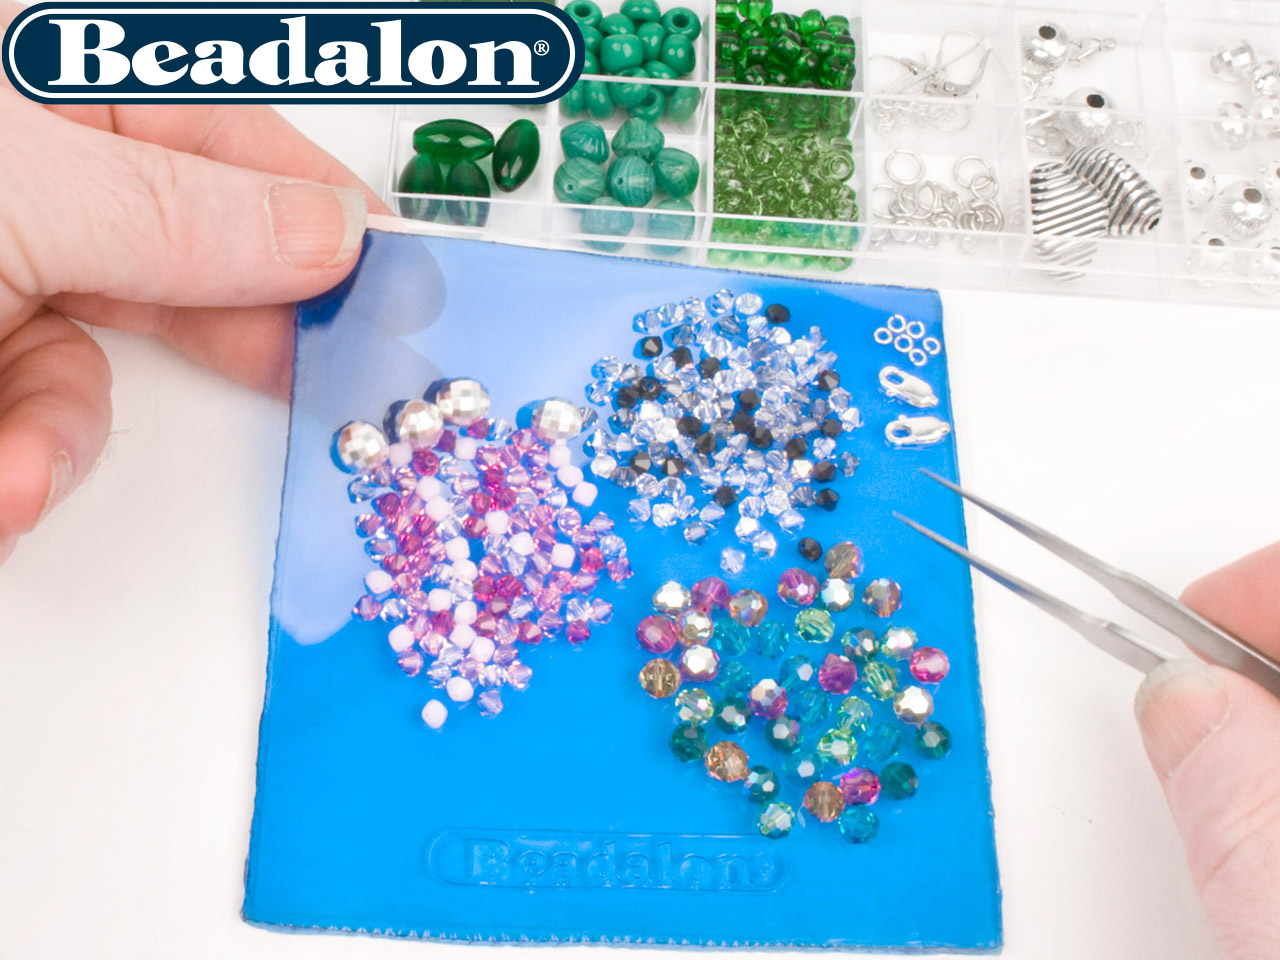 Beadalon Sticky Bead Mat - Standard Image - 3